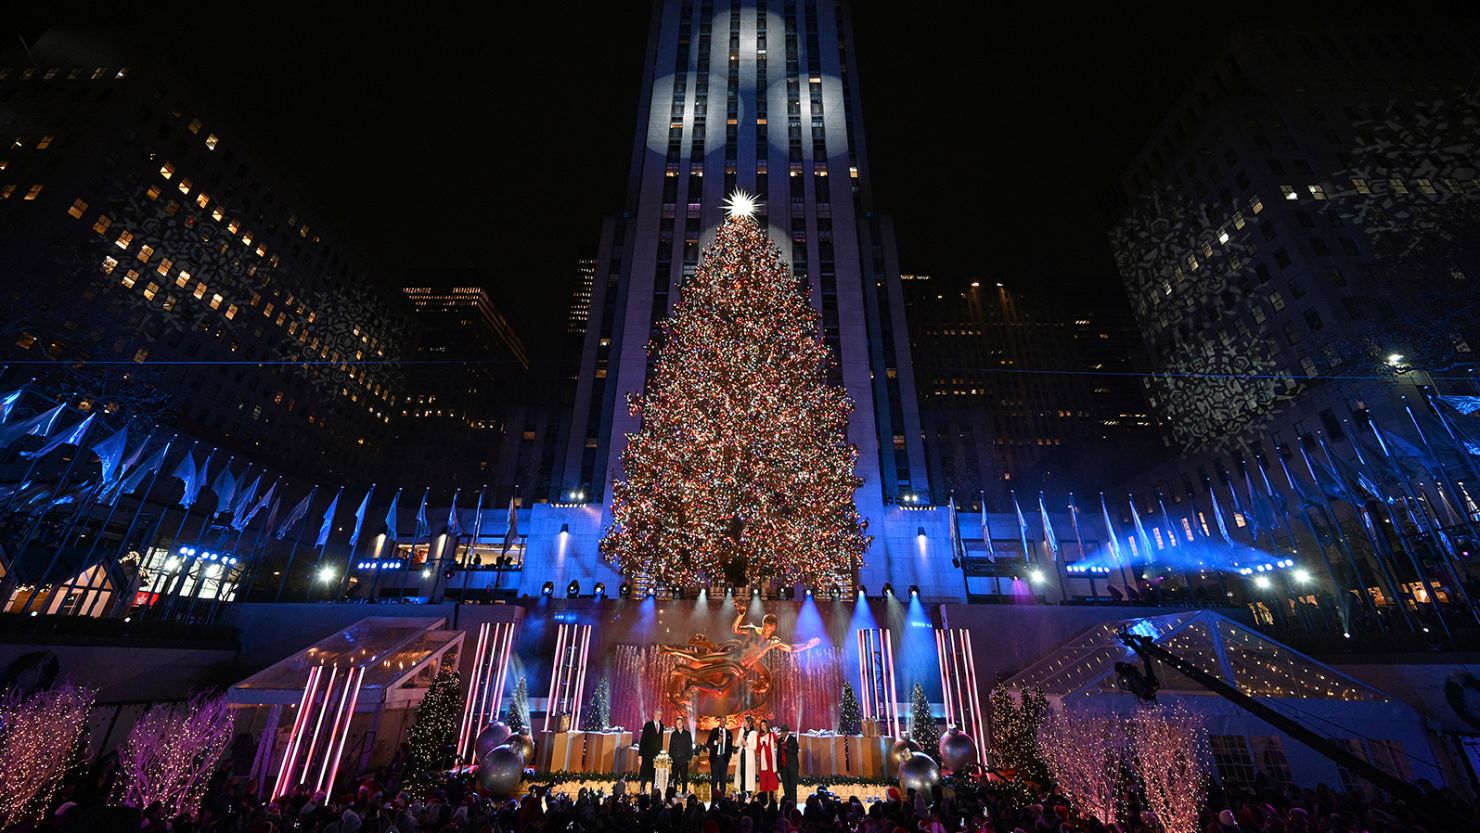 Annual Christmas Tree Lighting event set for Dec. 2